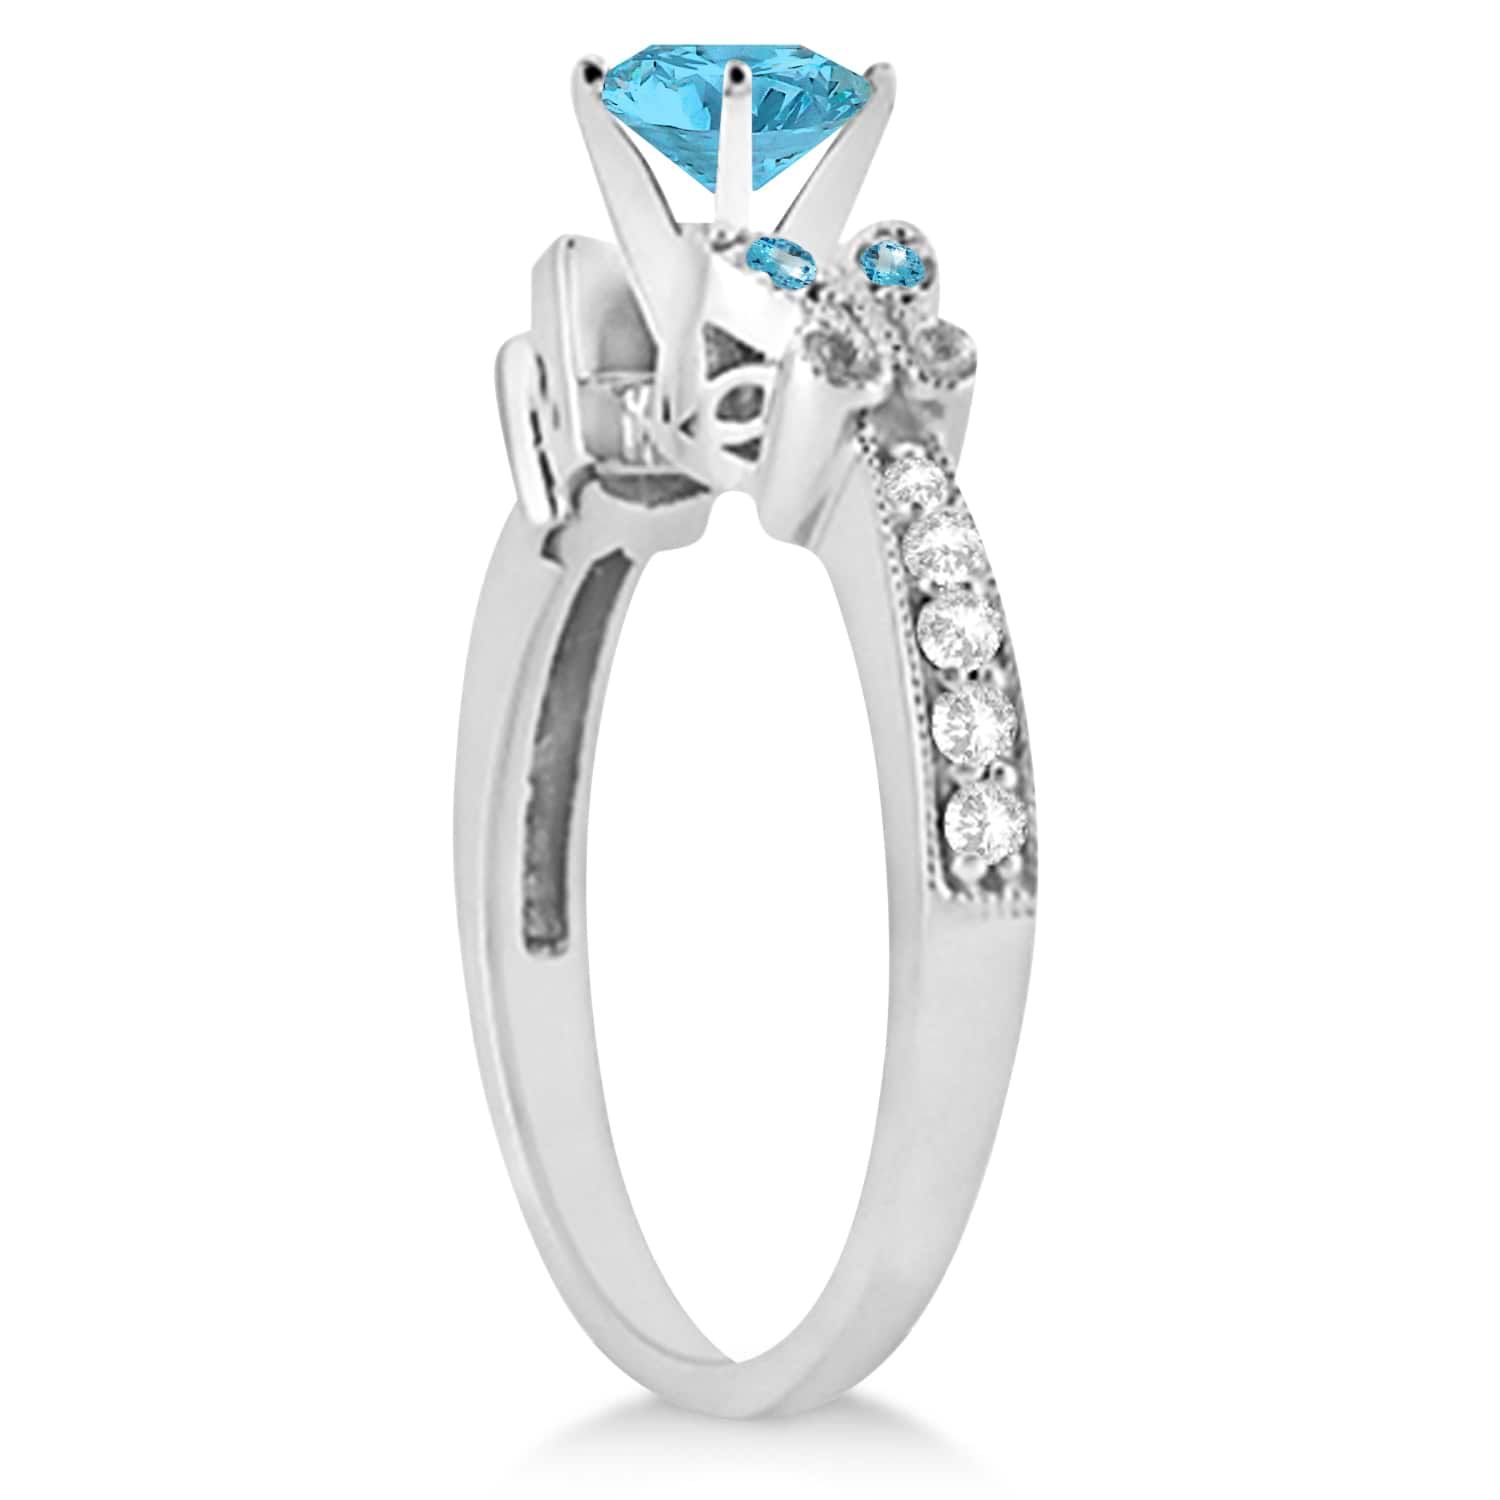 Butterfly Blue Topaz & Diamond Engagement Ring 18K White Gold (1.78ct)